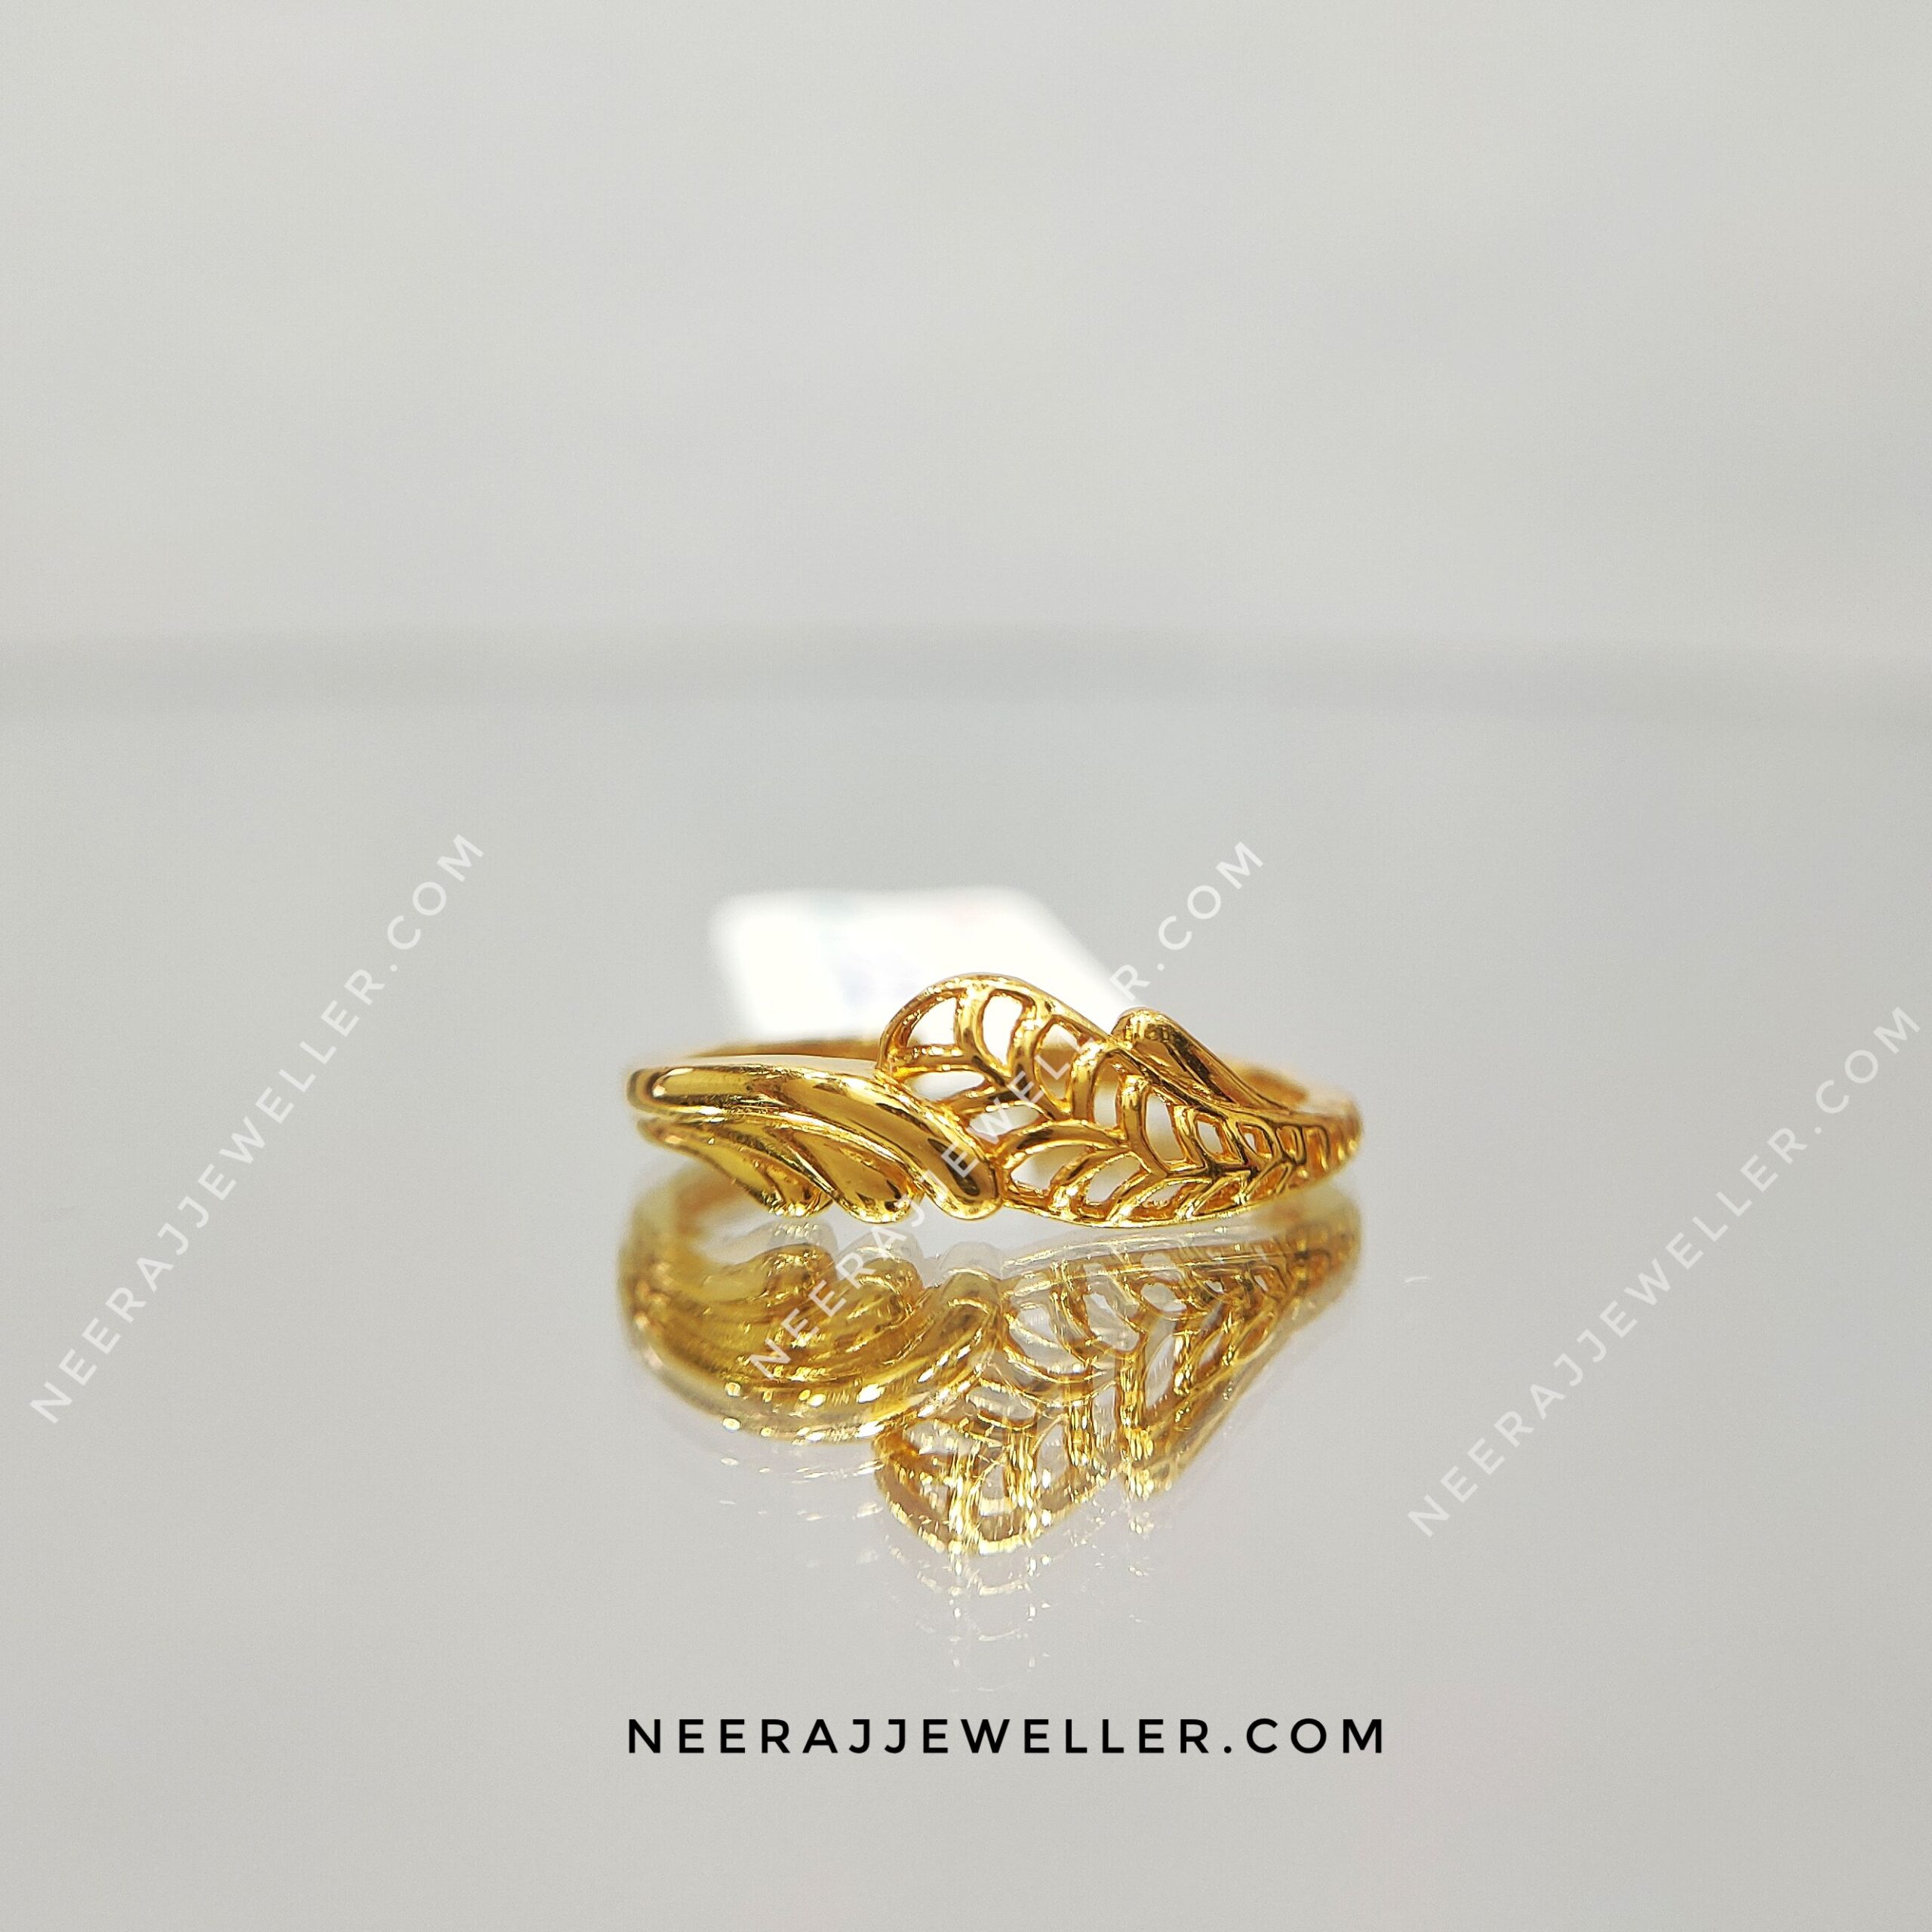 Buy quality Gold 22.k Ladies Ring in Ahmedabad